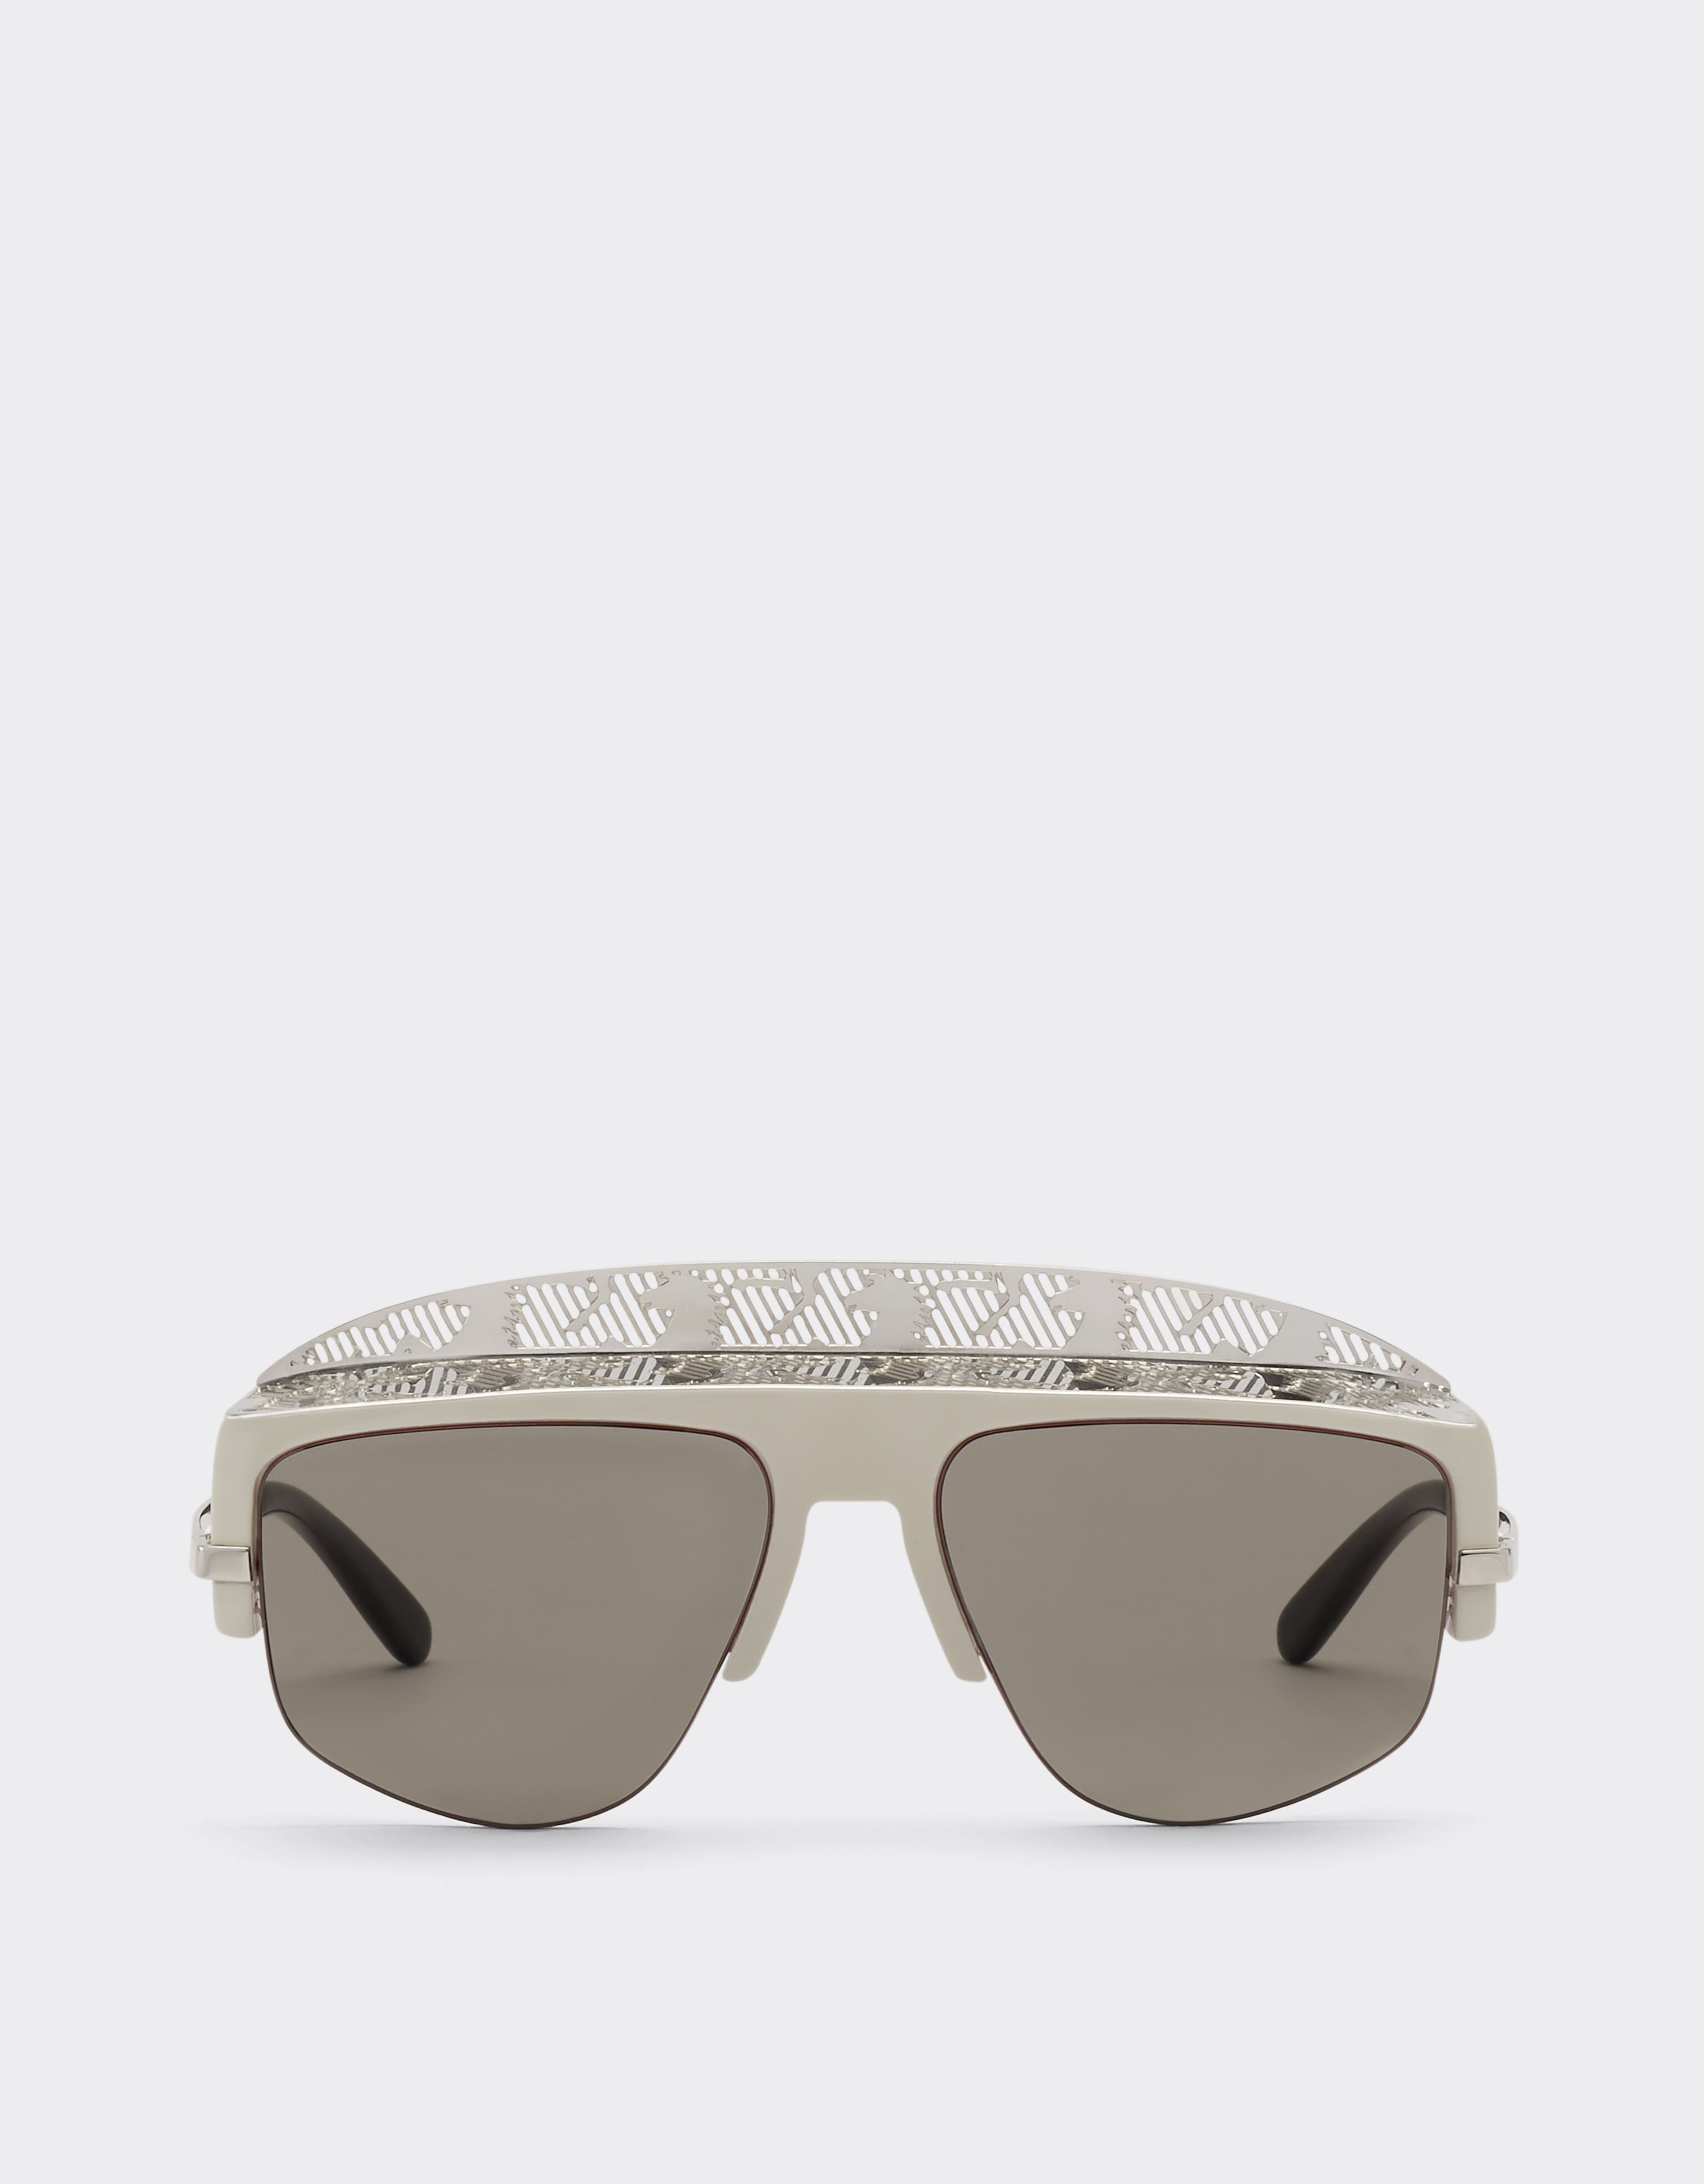 Ferrari Ferrari sunglasses with silver mirror lens Black Matt F1250f